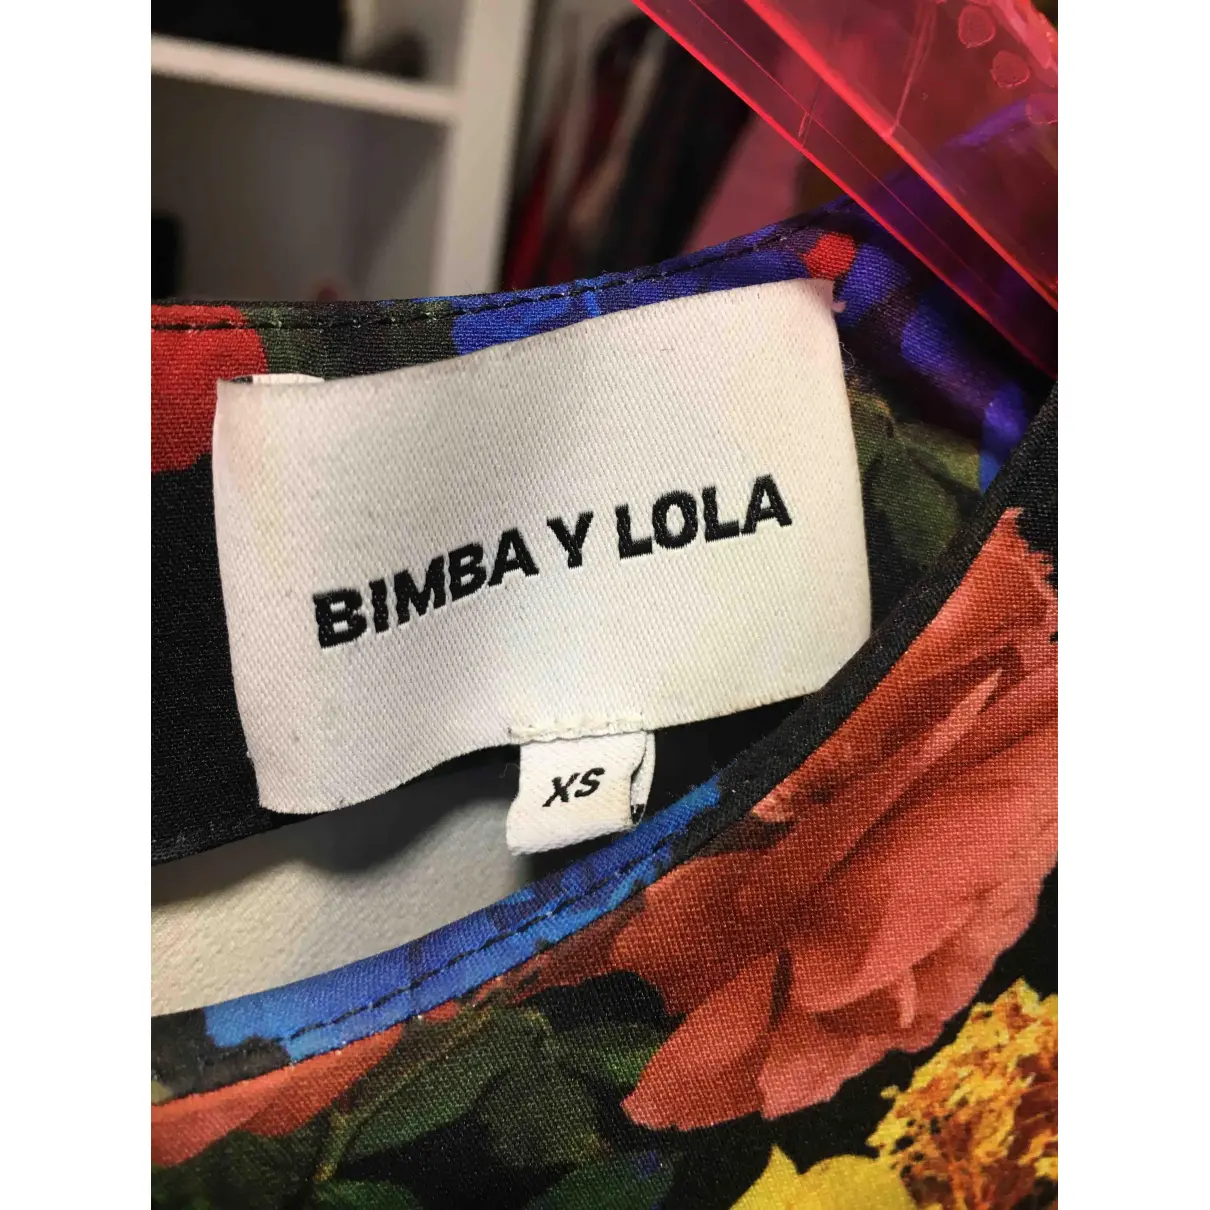 Luxury Bimba y Lola Dresses Women